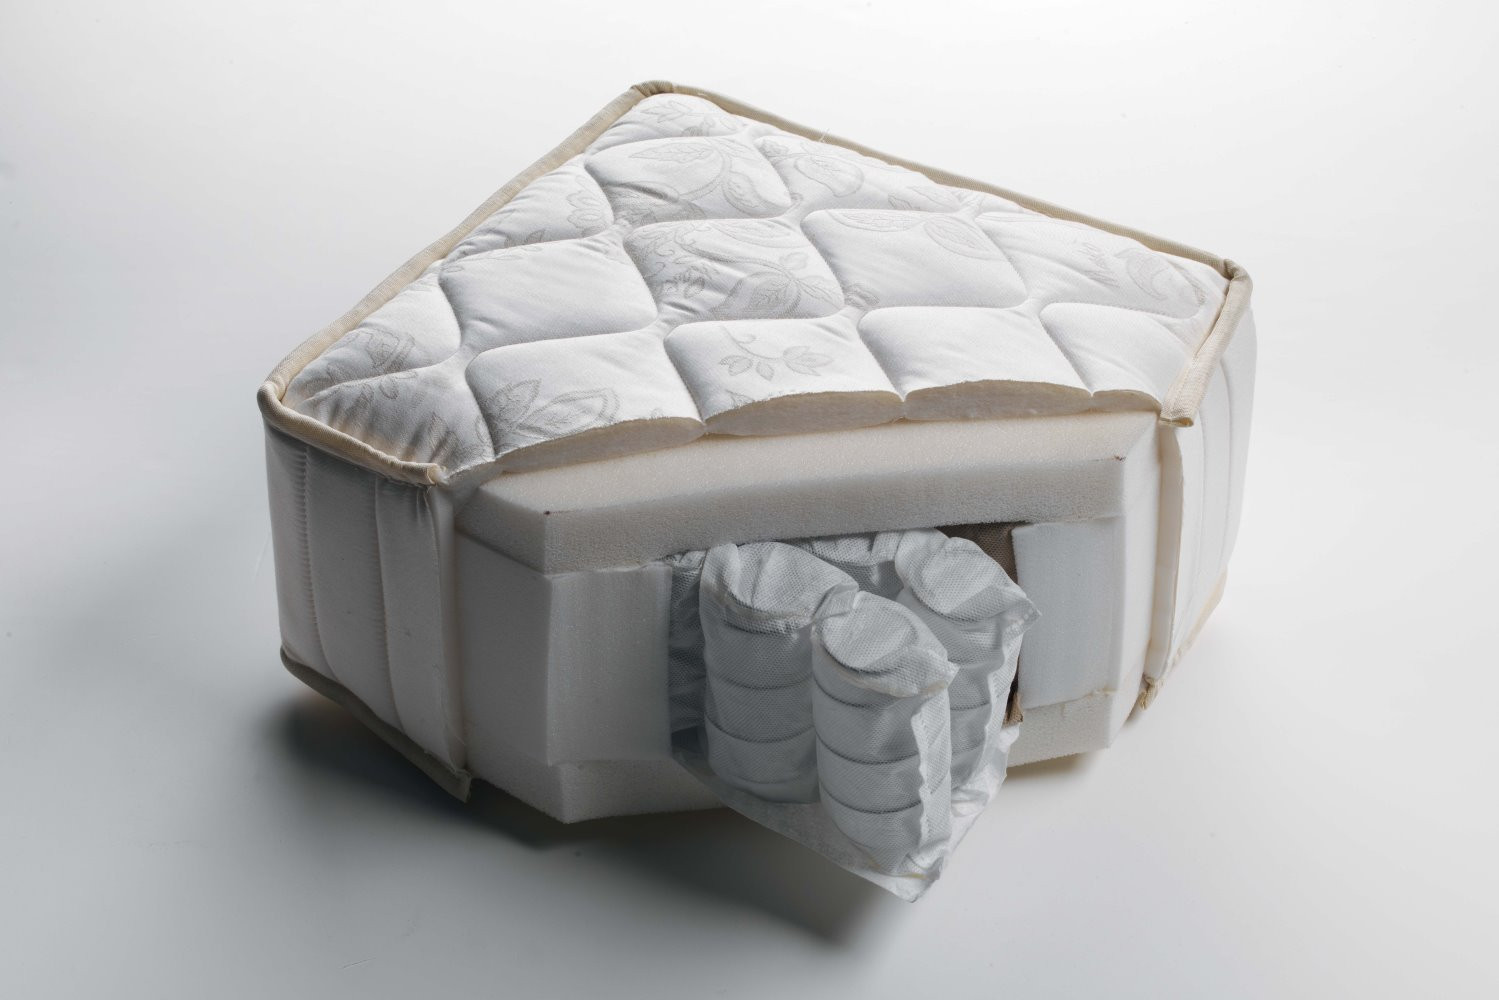 foam or pocket spring mattress